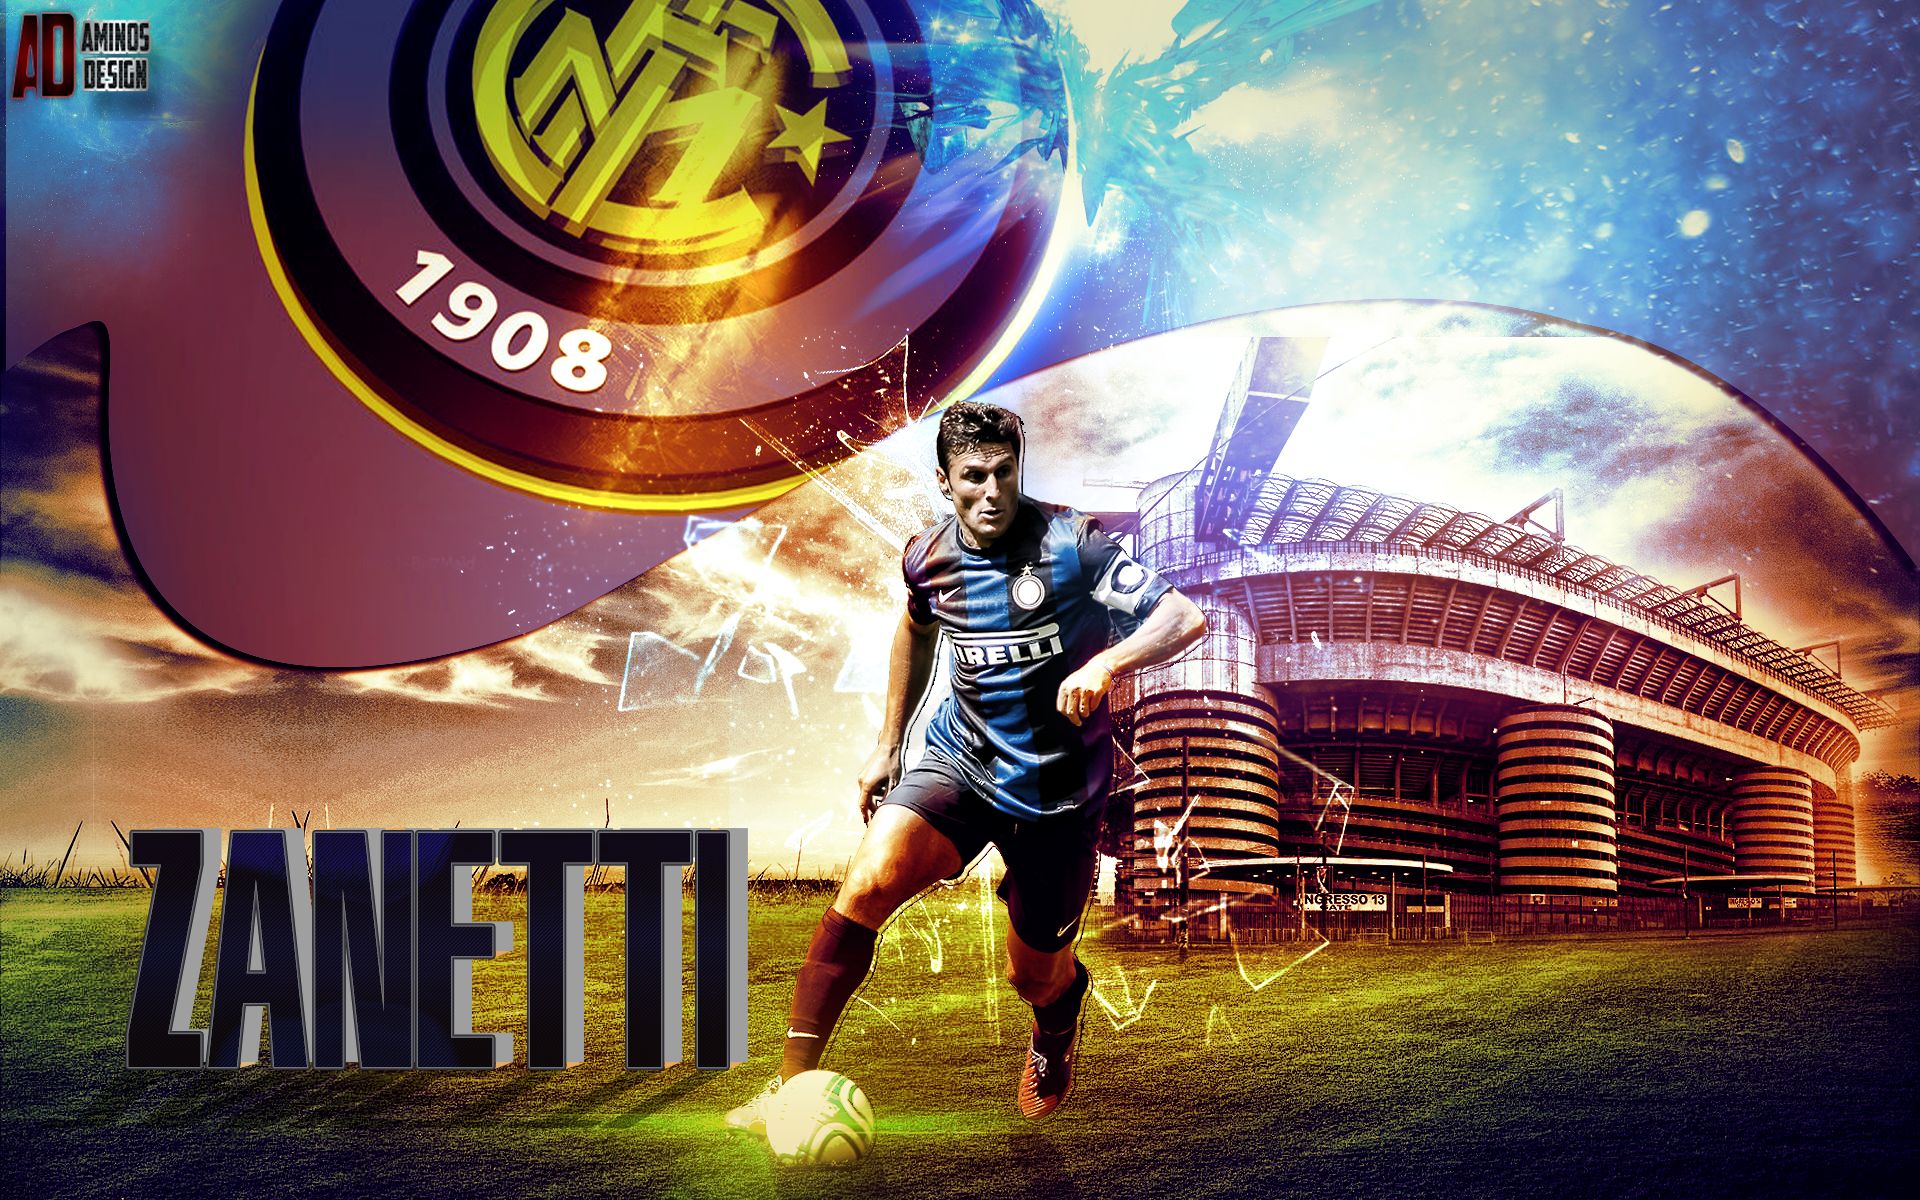 Descarga gratuita de fondo de pantalla para móvil de Fútbol, Deporte, Inter De Milán, Javier Zanetti.